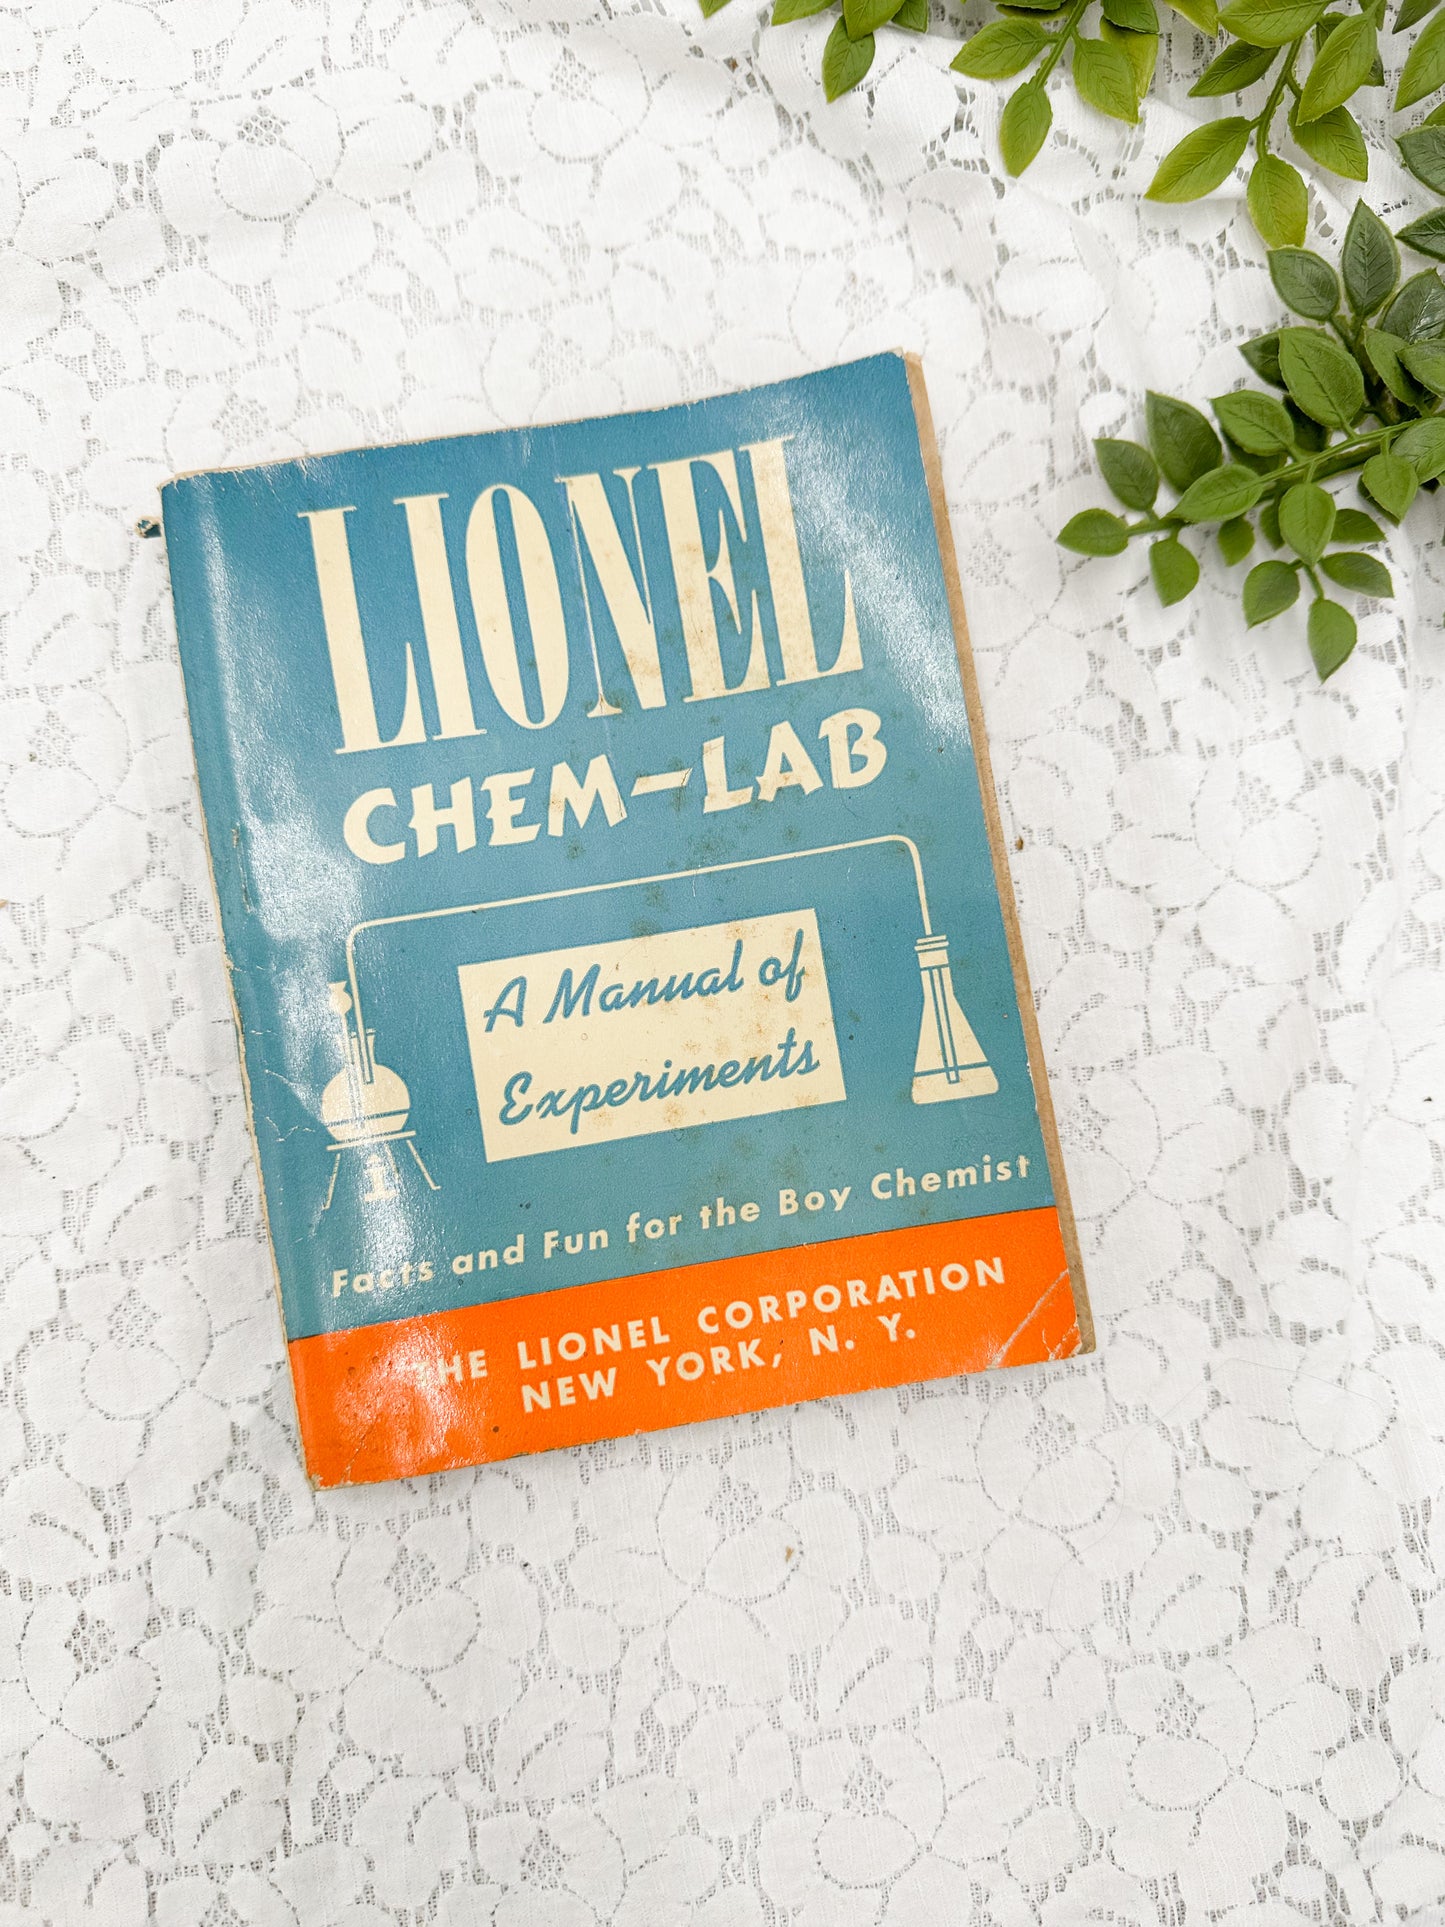 Lionel Chem Lab Book- 1942